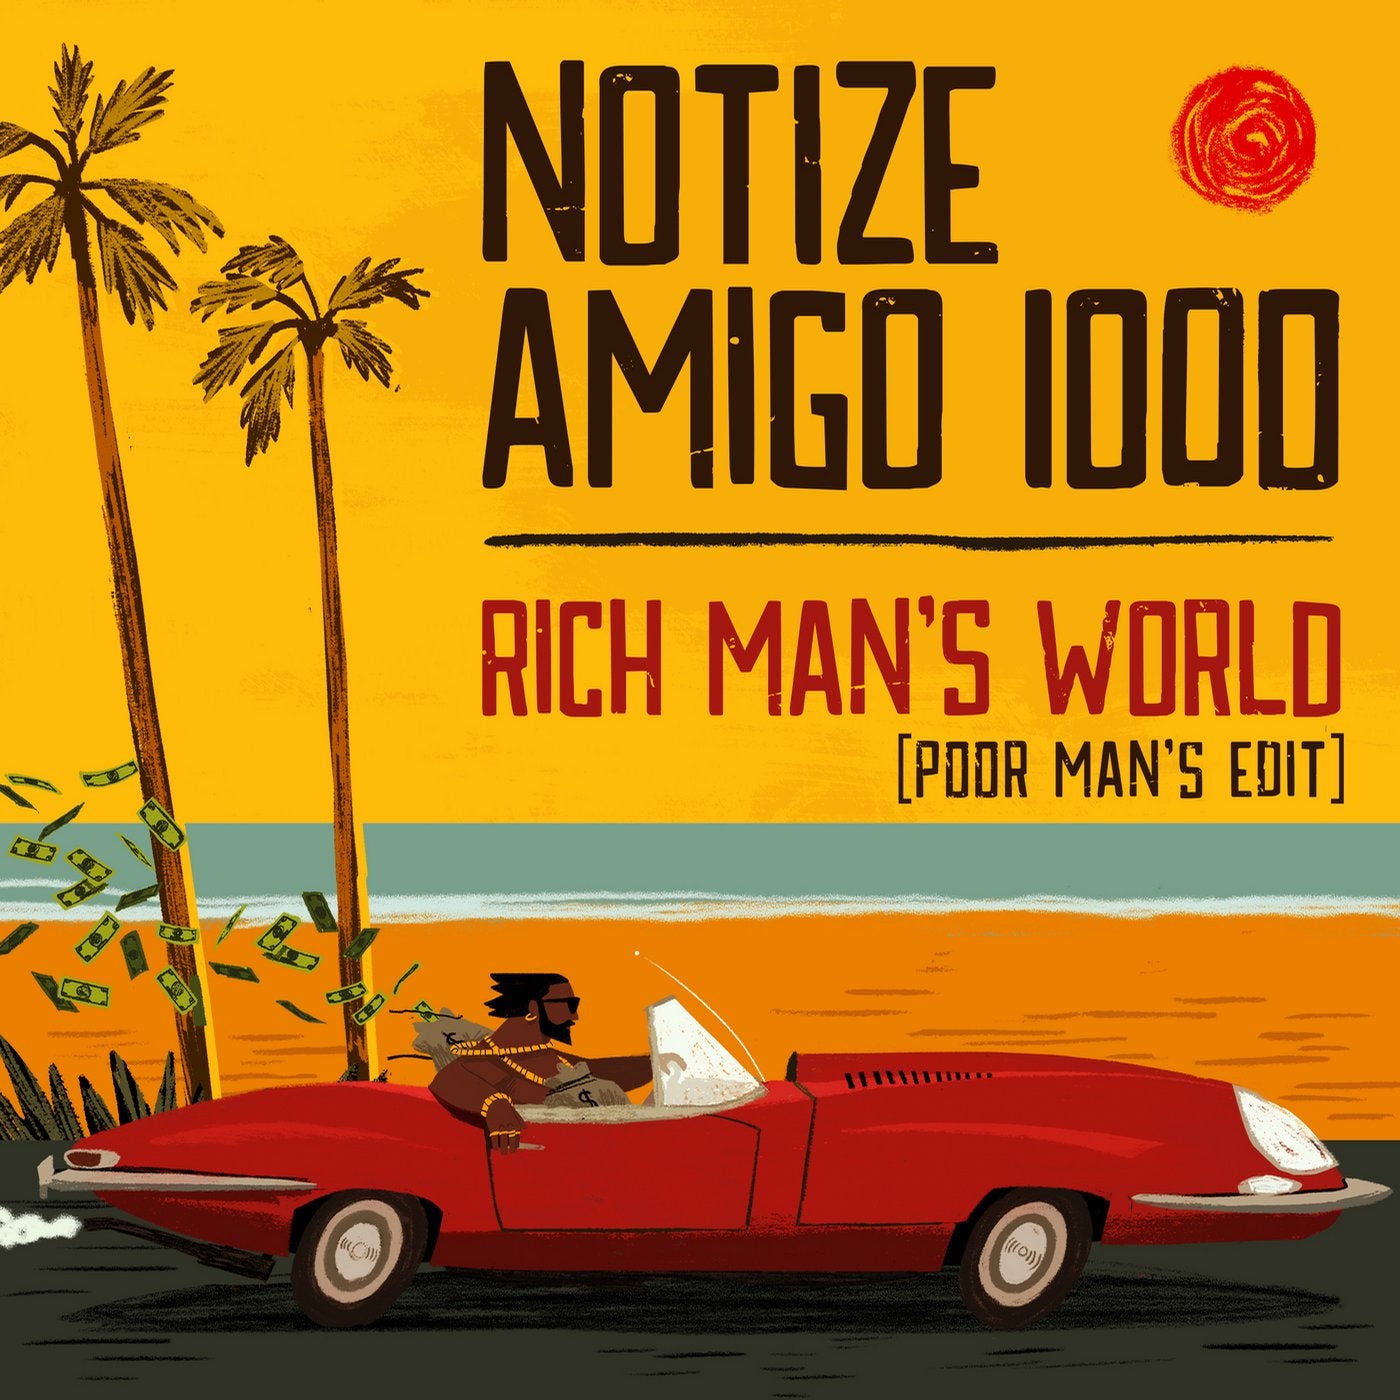 Rich Man's World (Poor Man's Edit)